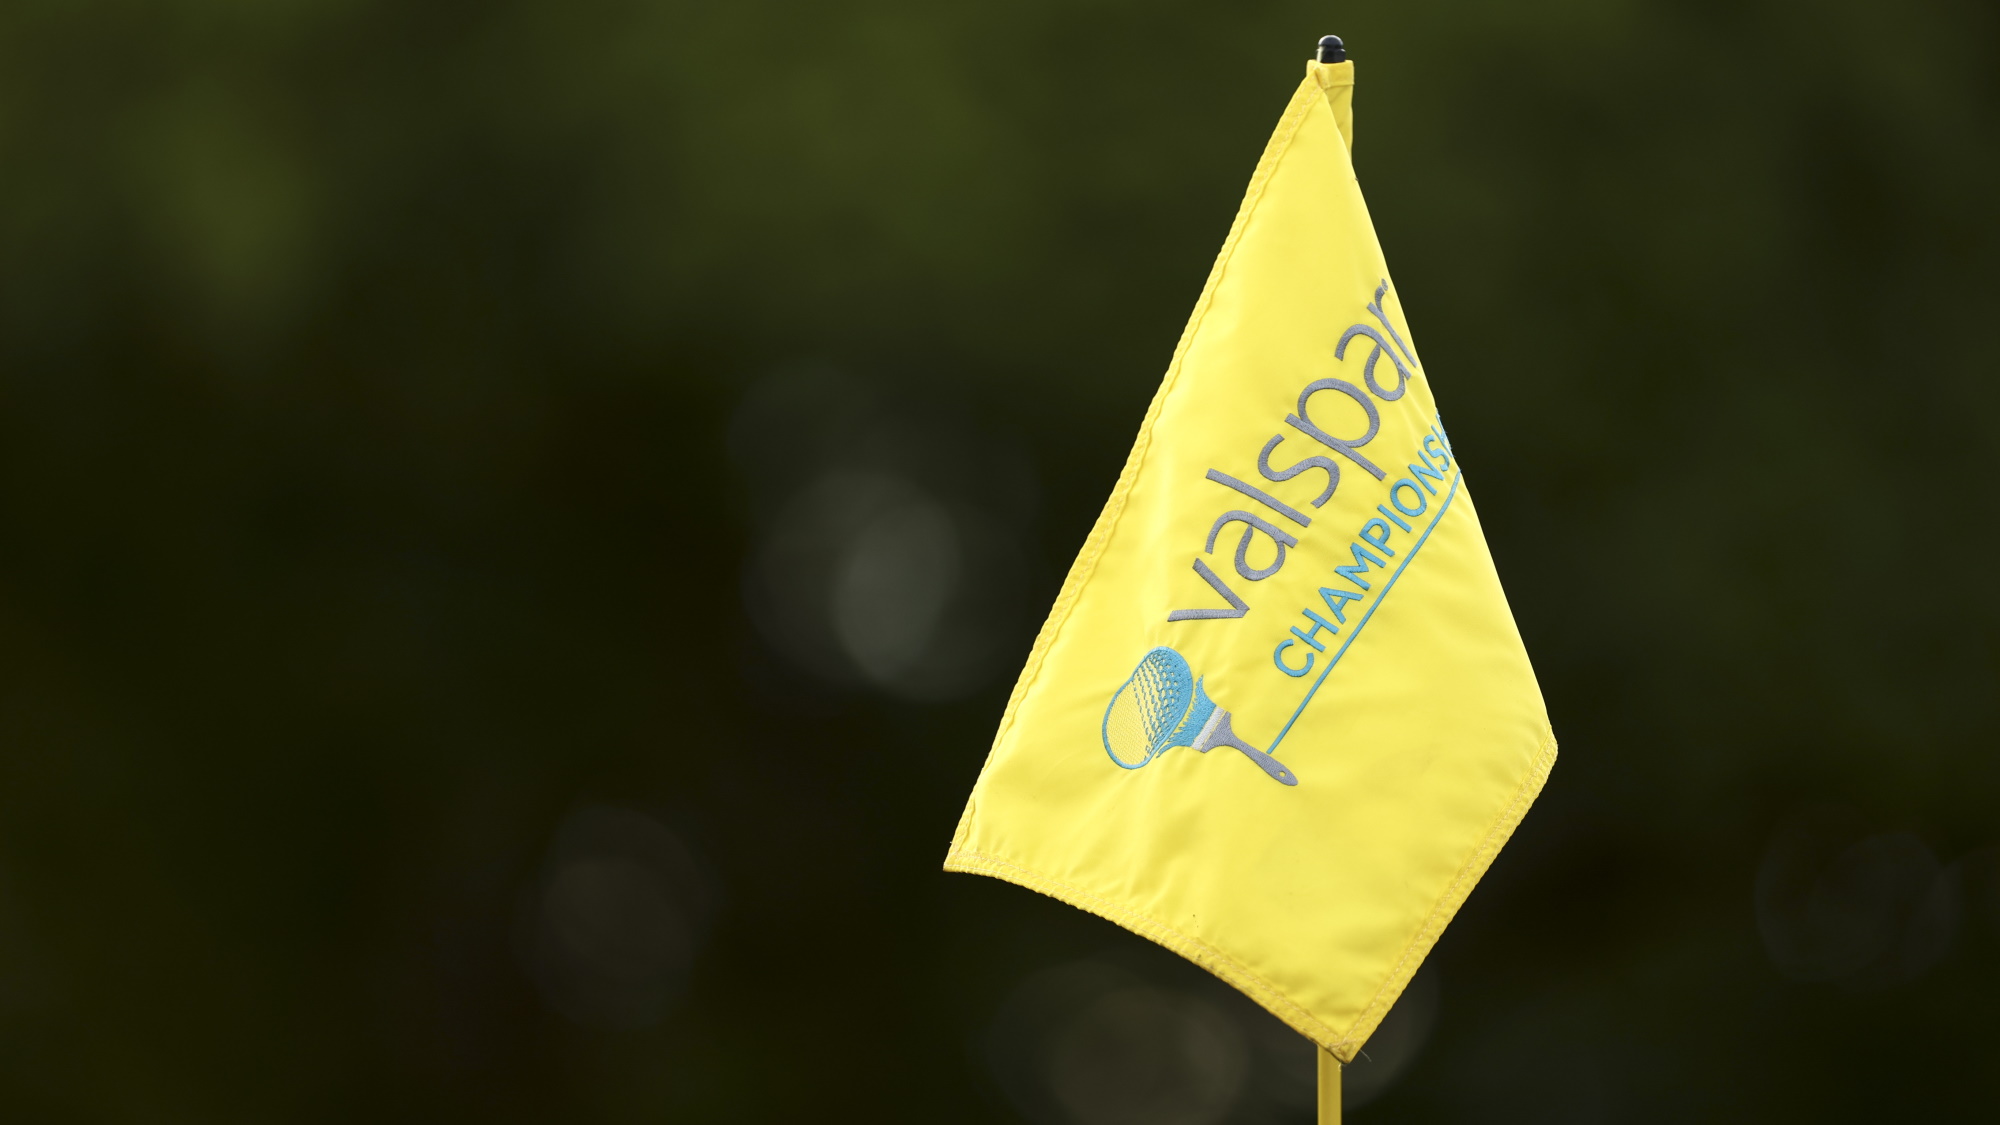 Valspar Championship live stream 2022 how to watch PGA golf online